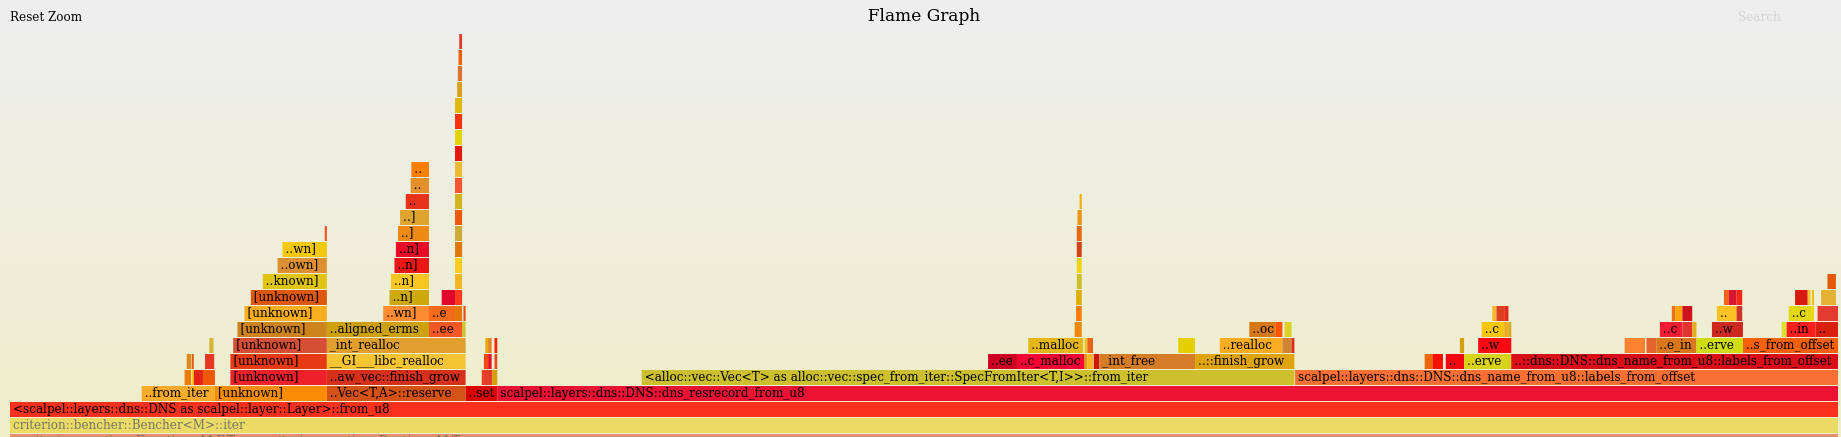 FlameGraph 2 - FlameGraph for Vec<u8>